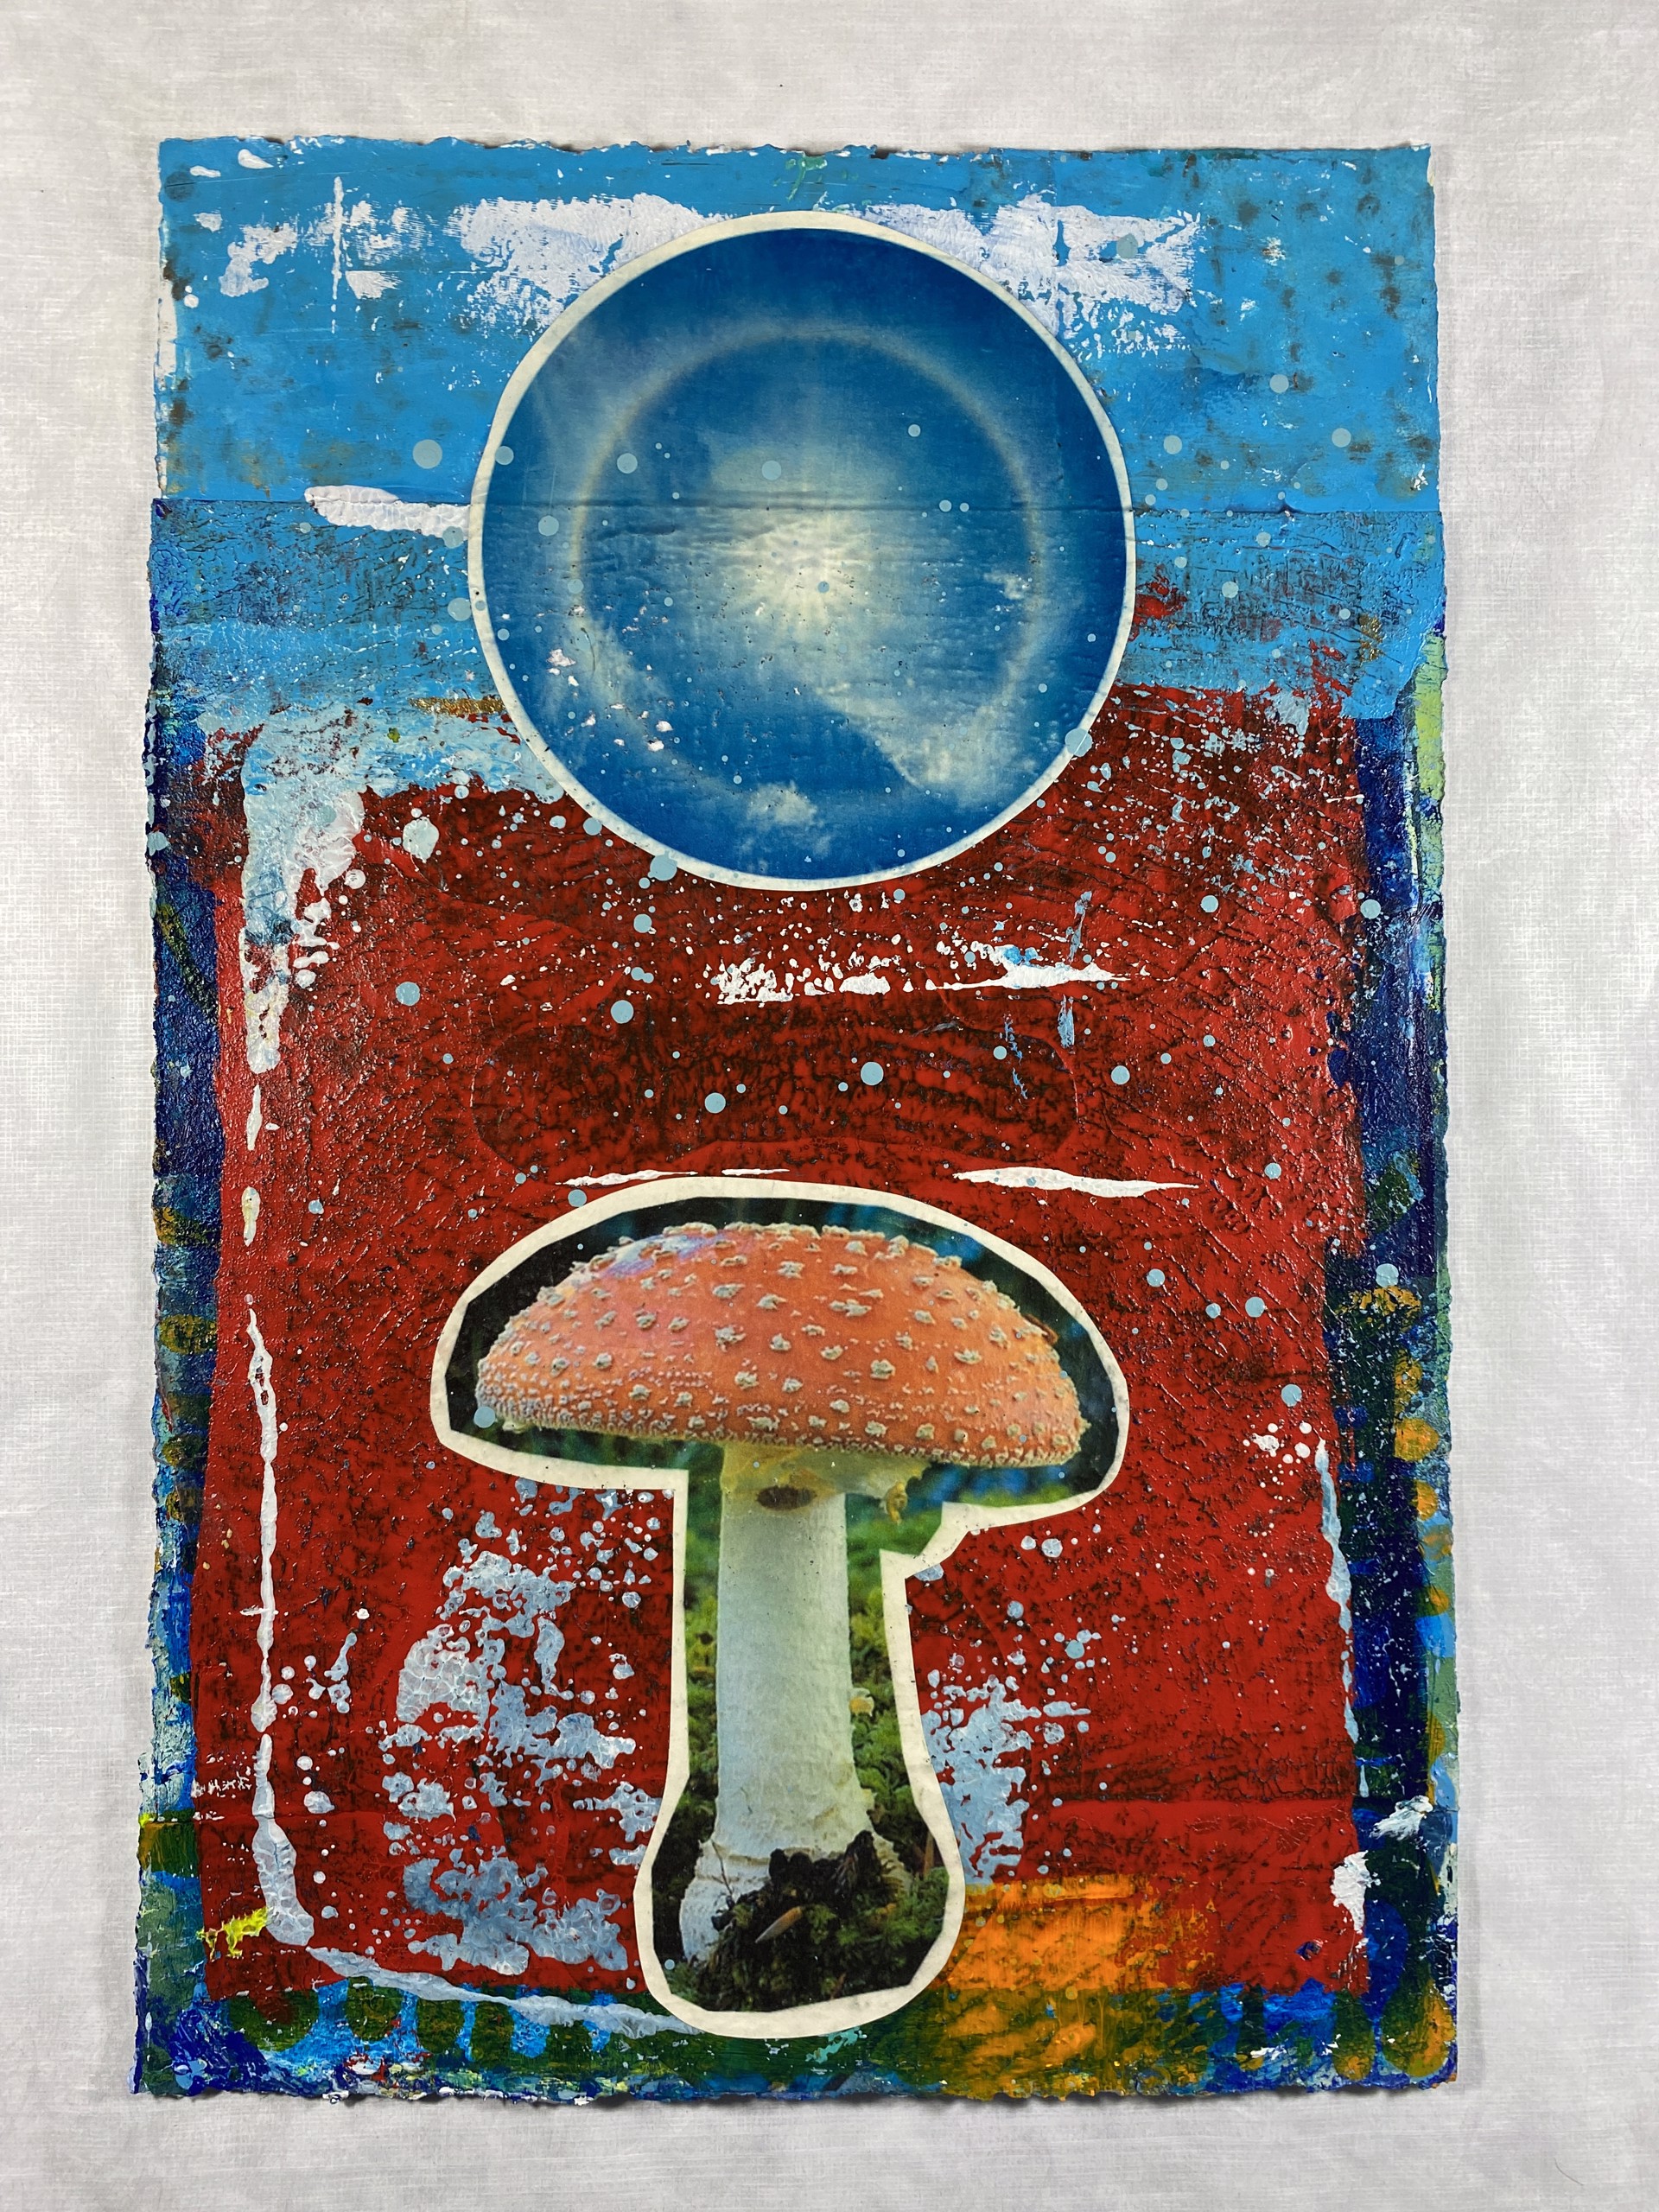 Sun Dog + Amanita Mushroom by Jason Rohlf